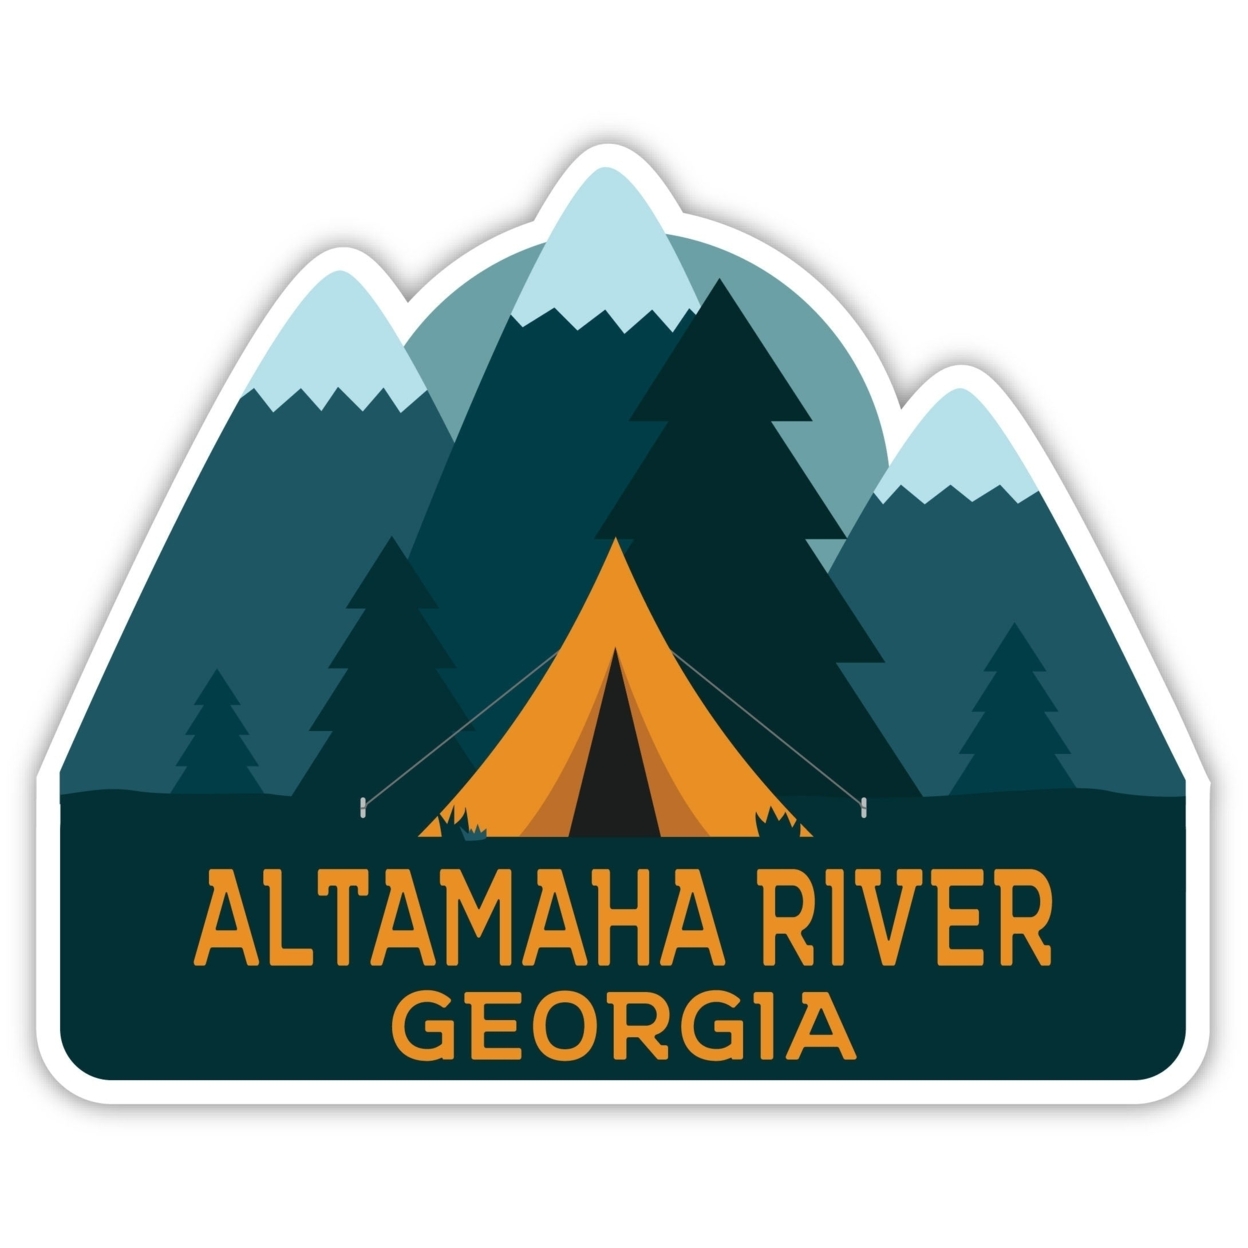 Altamaha River Georgia Souvenir Decorative Stickers (Choose Theme And Size) - 4-Pack, 2-Inch, Tent